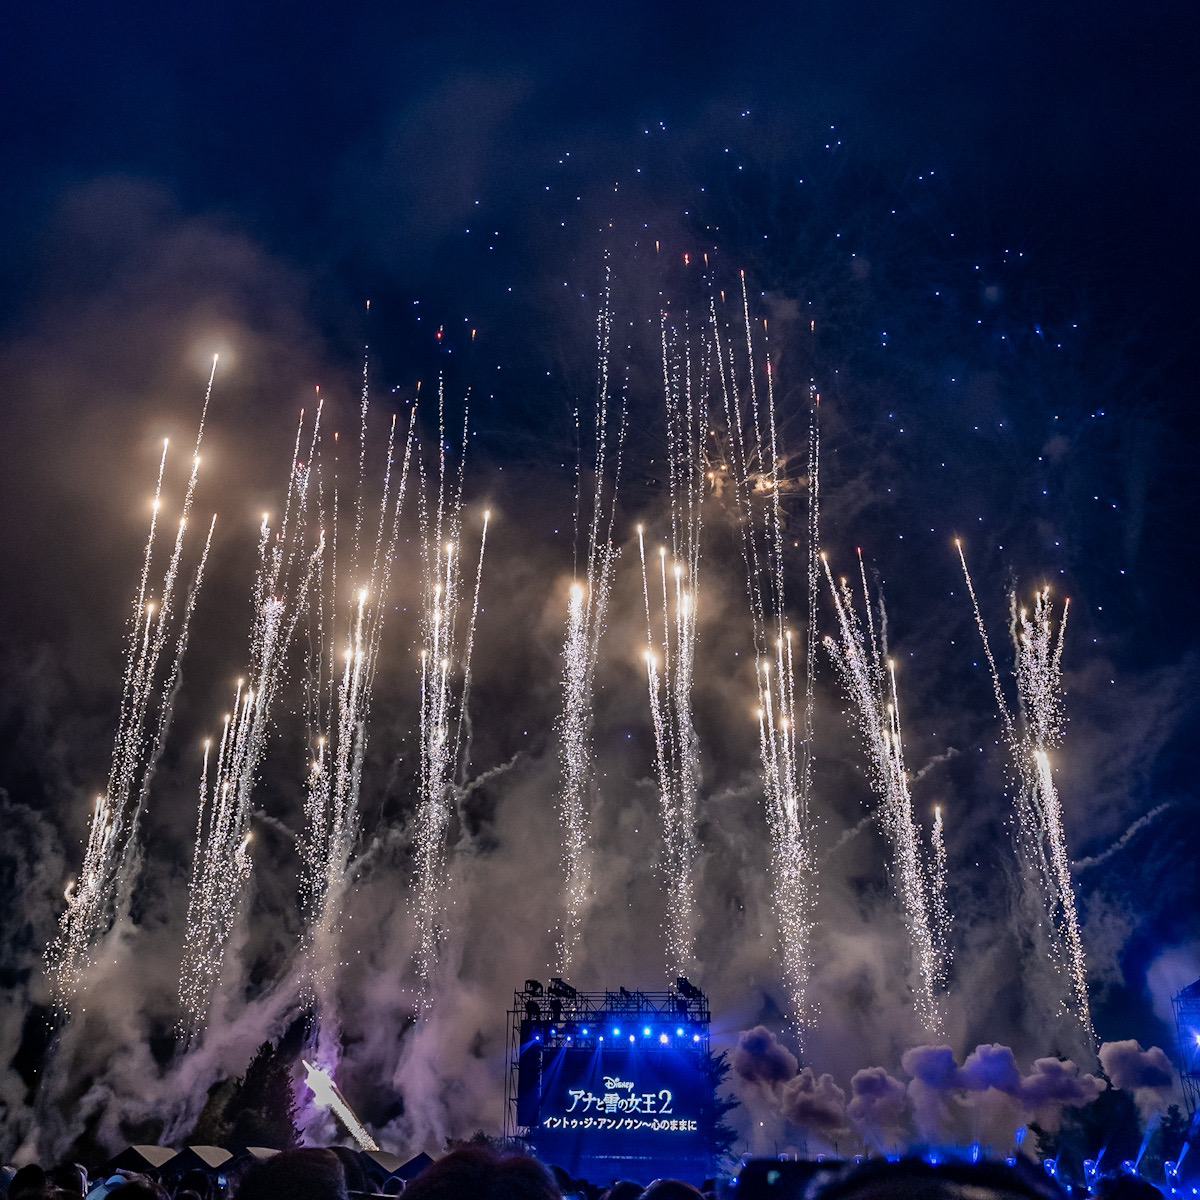 「Disney Music & Fireworks」山中湖公演 レポート2